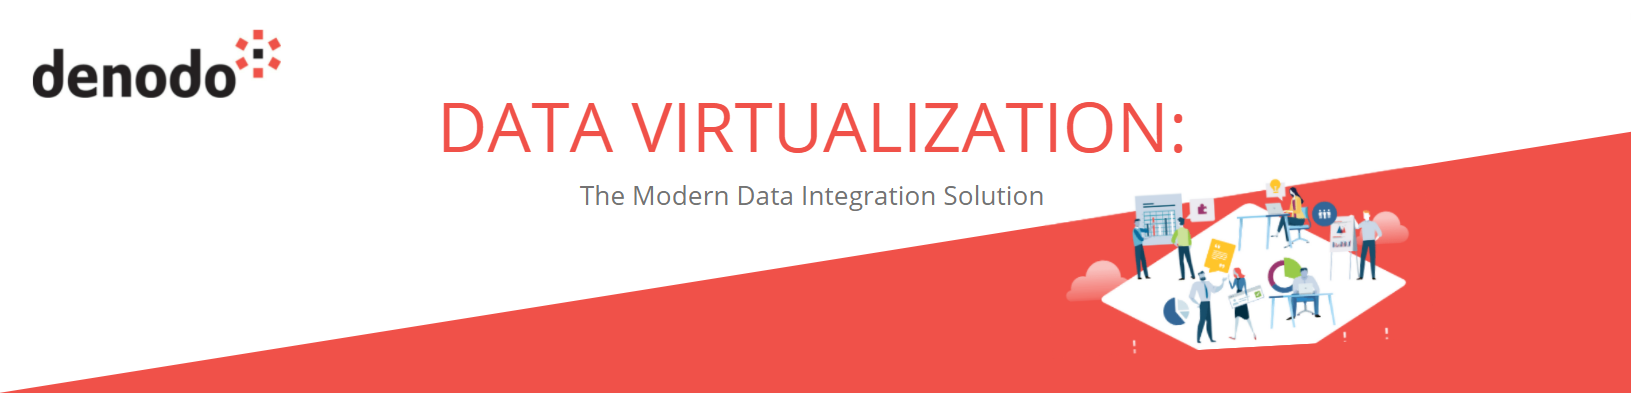 Data Virtualization: The Modern Data Integration Solution